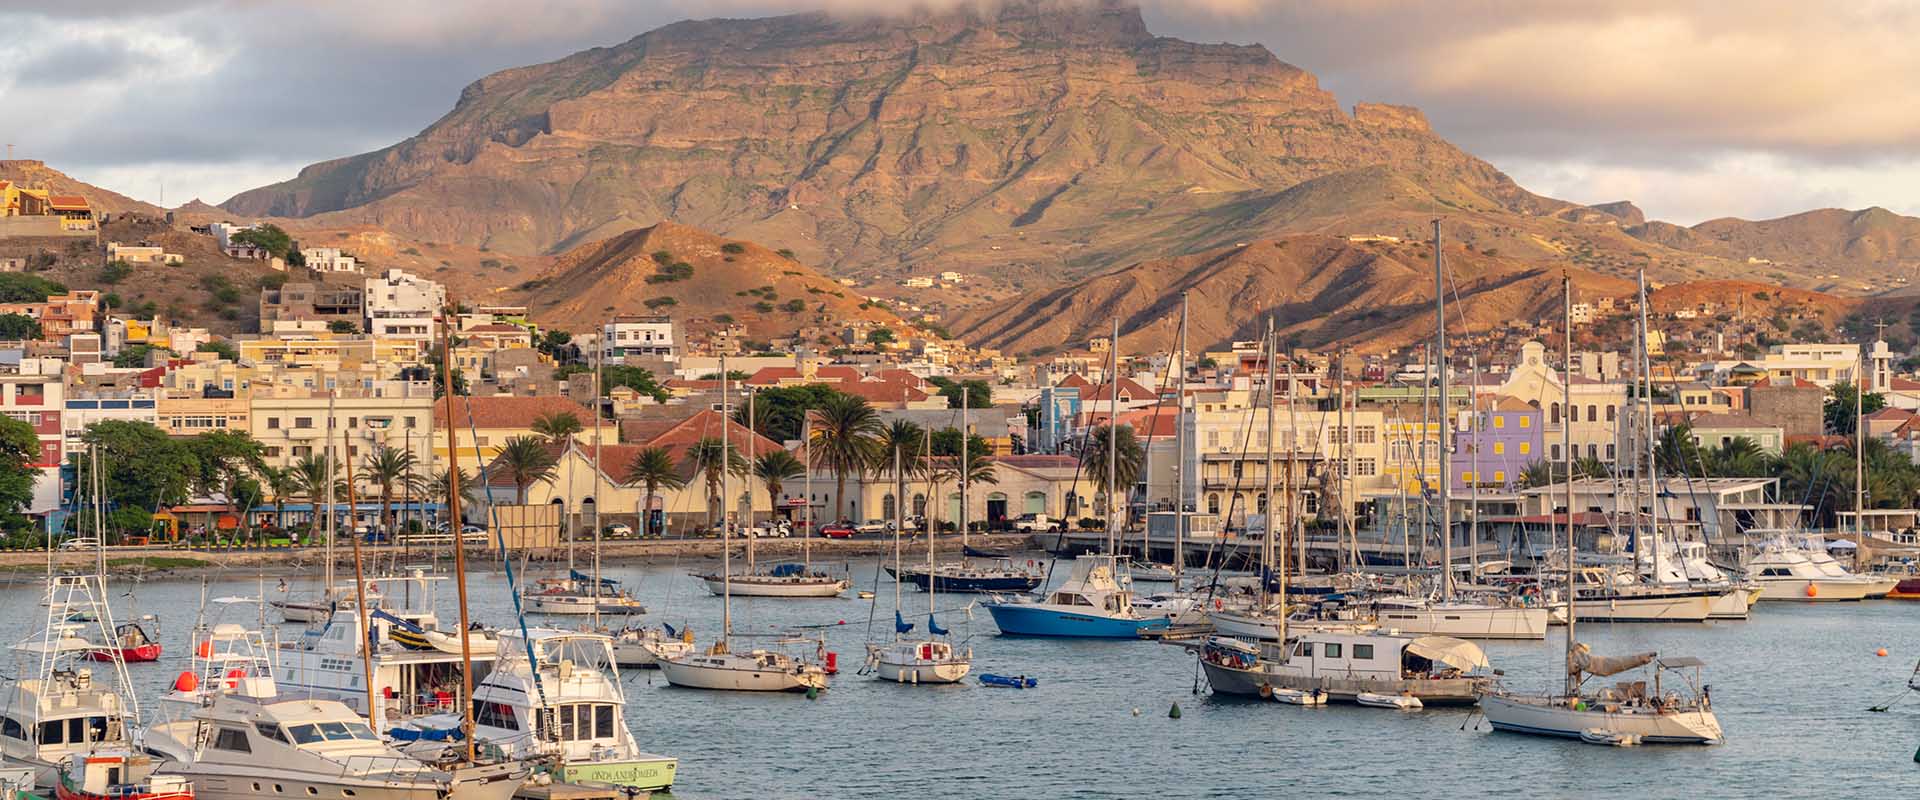 Adventure Cruise Ships in Cape Verde - LiveAboard.com